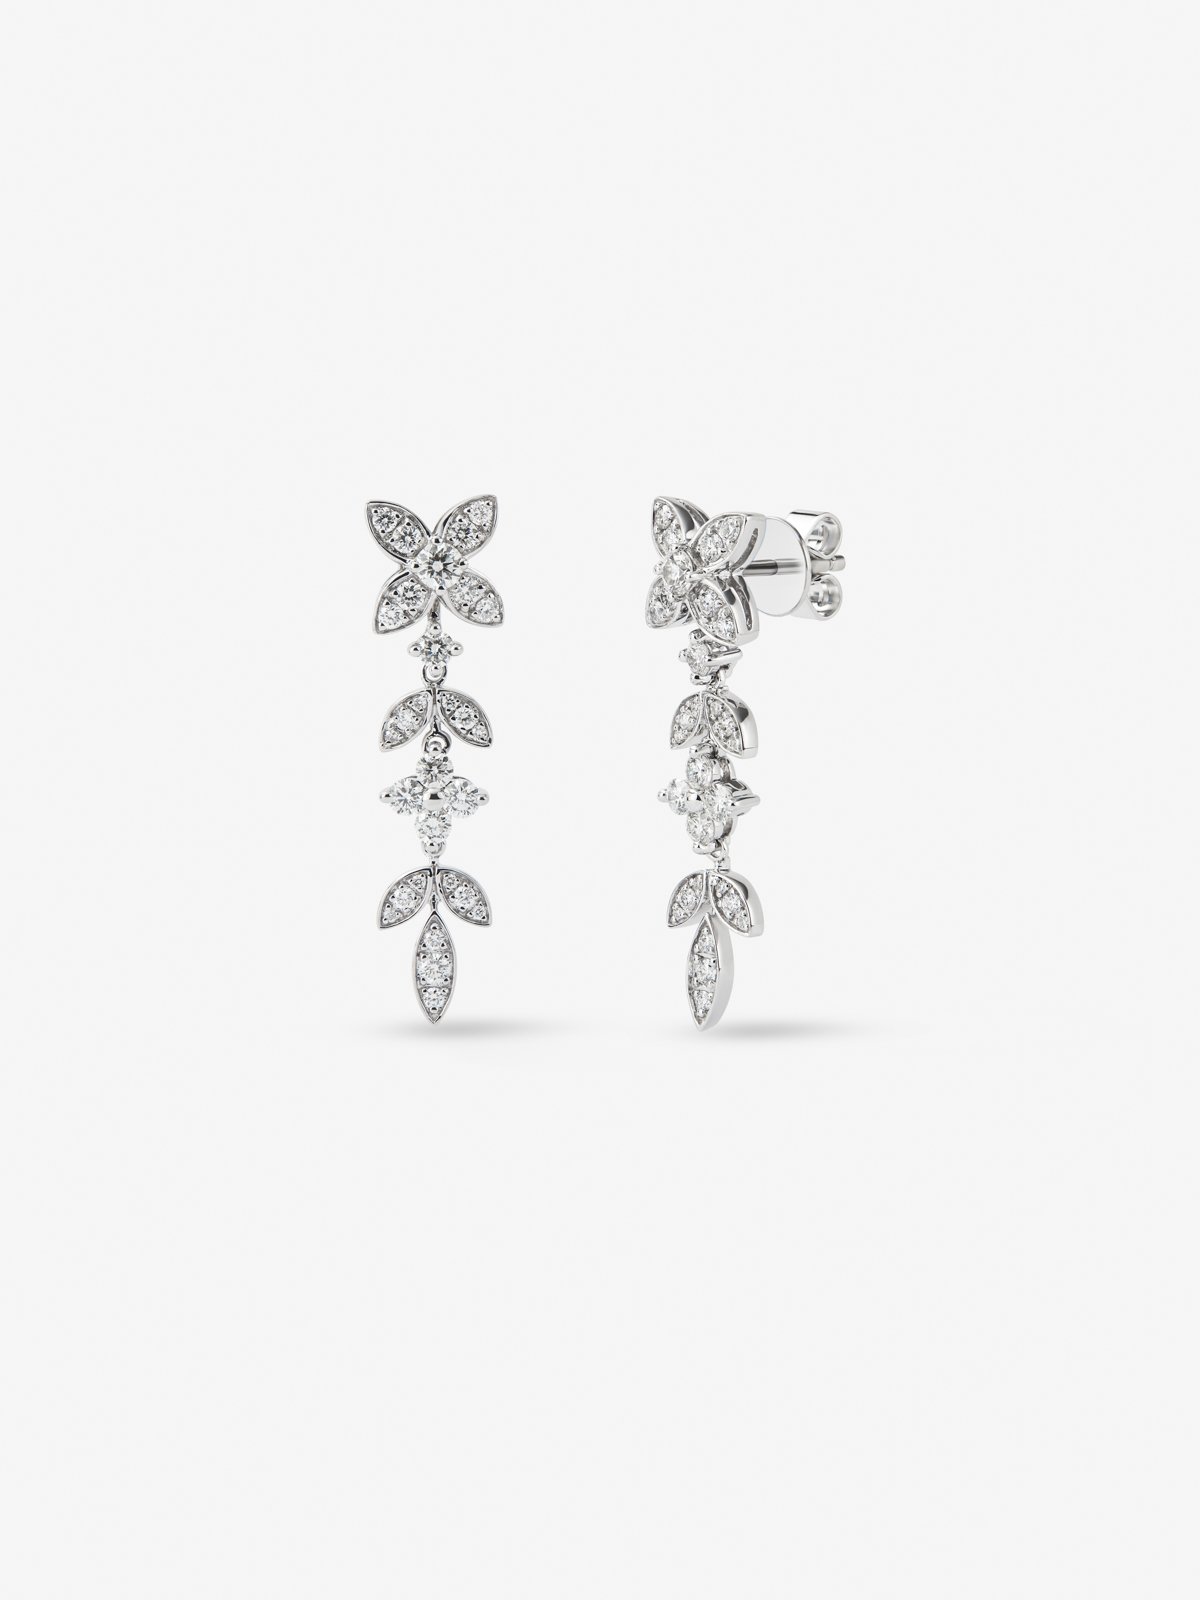 Detachable 18K white gold earrings with 1.07 ct brilliant-cut diamonds